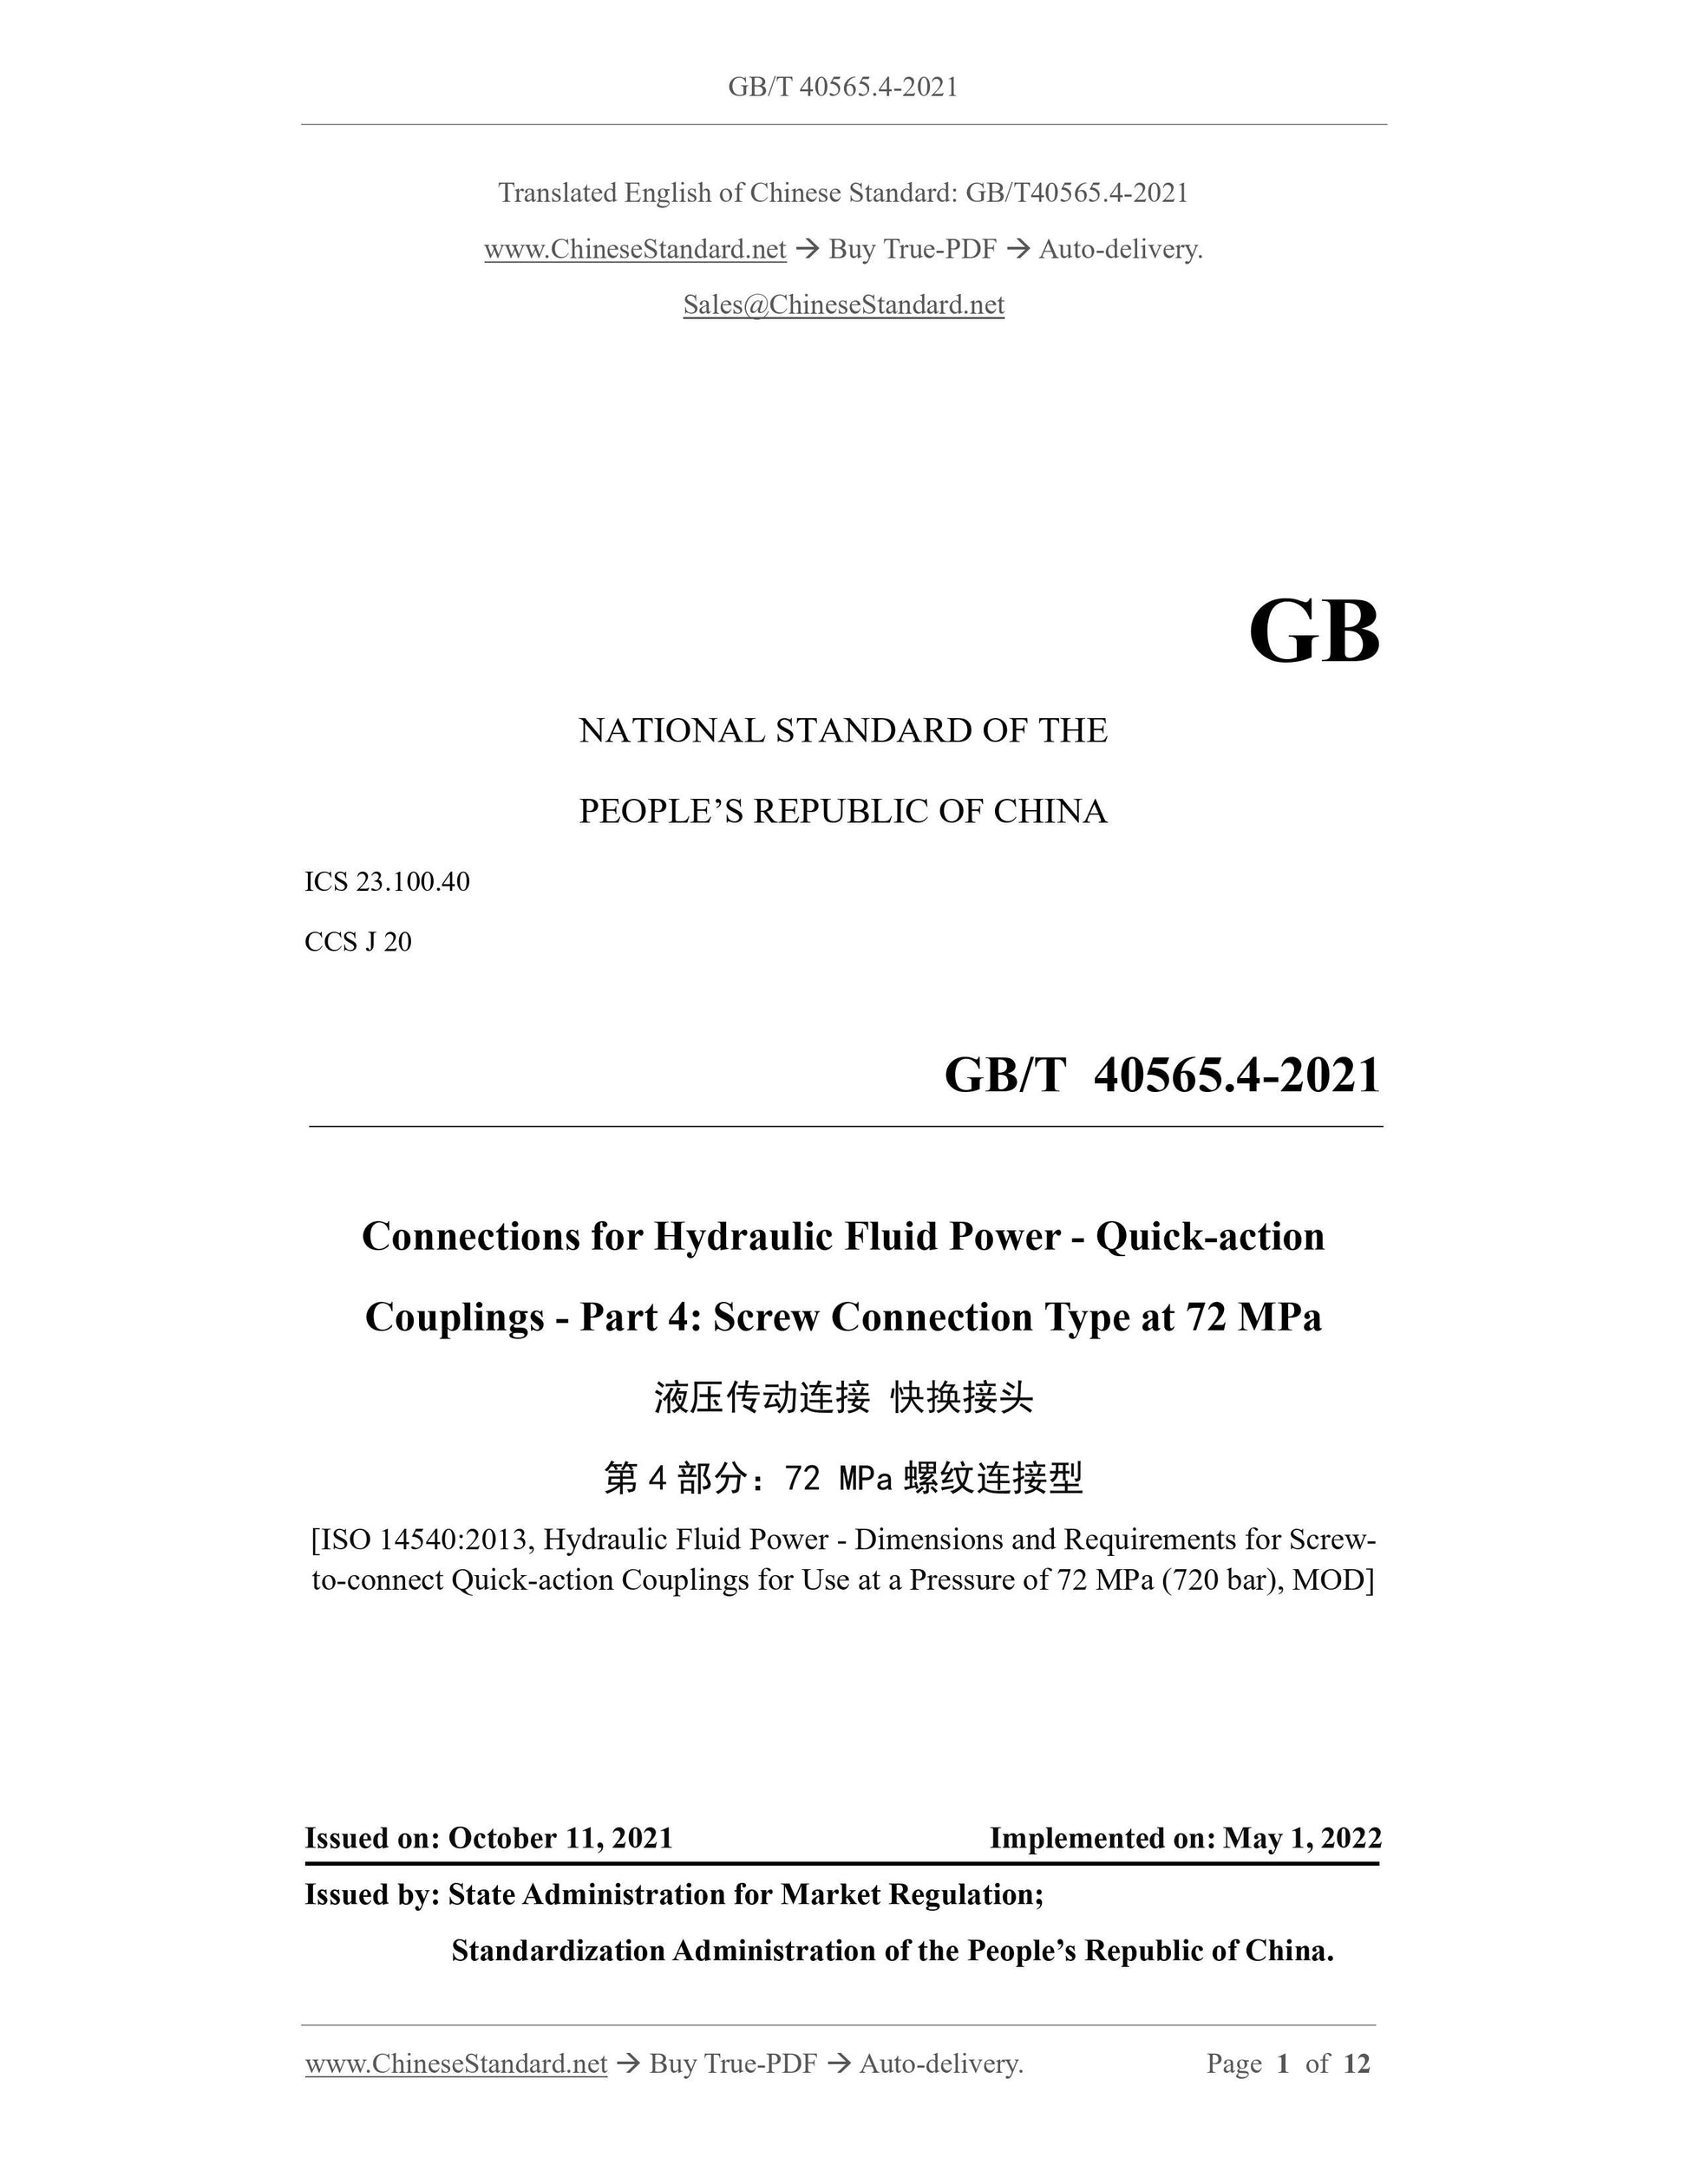 GBT40565.4-2021 Page 1